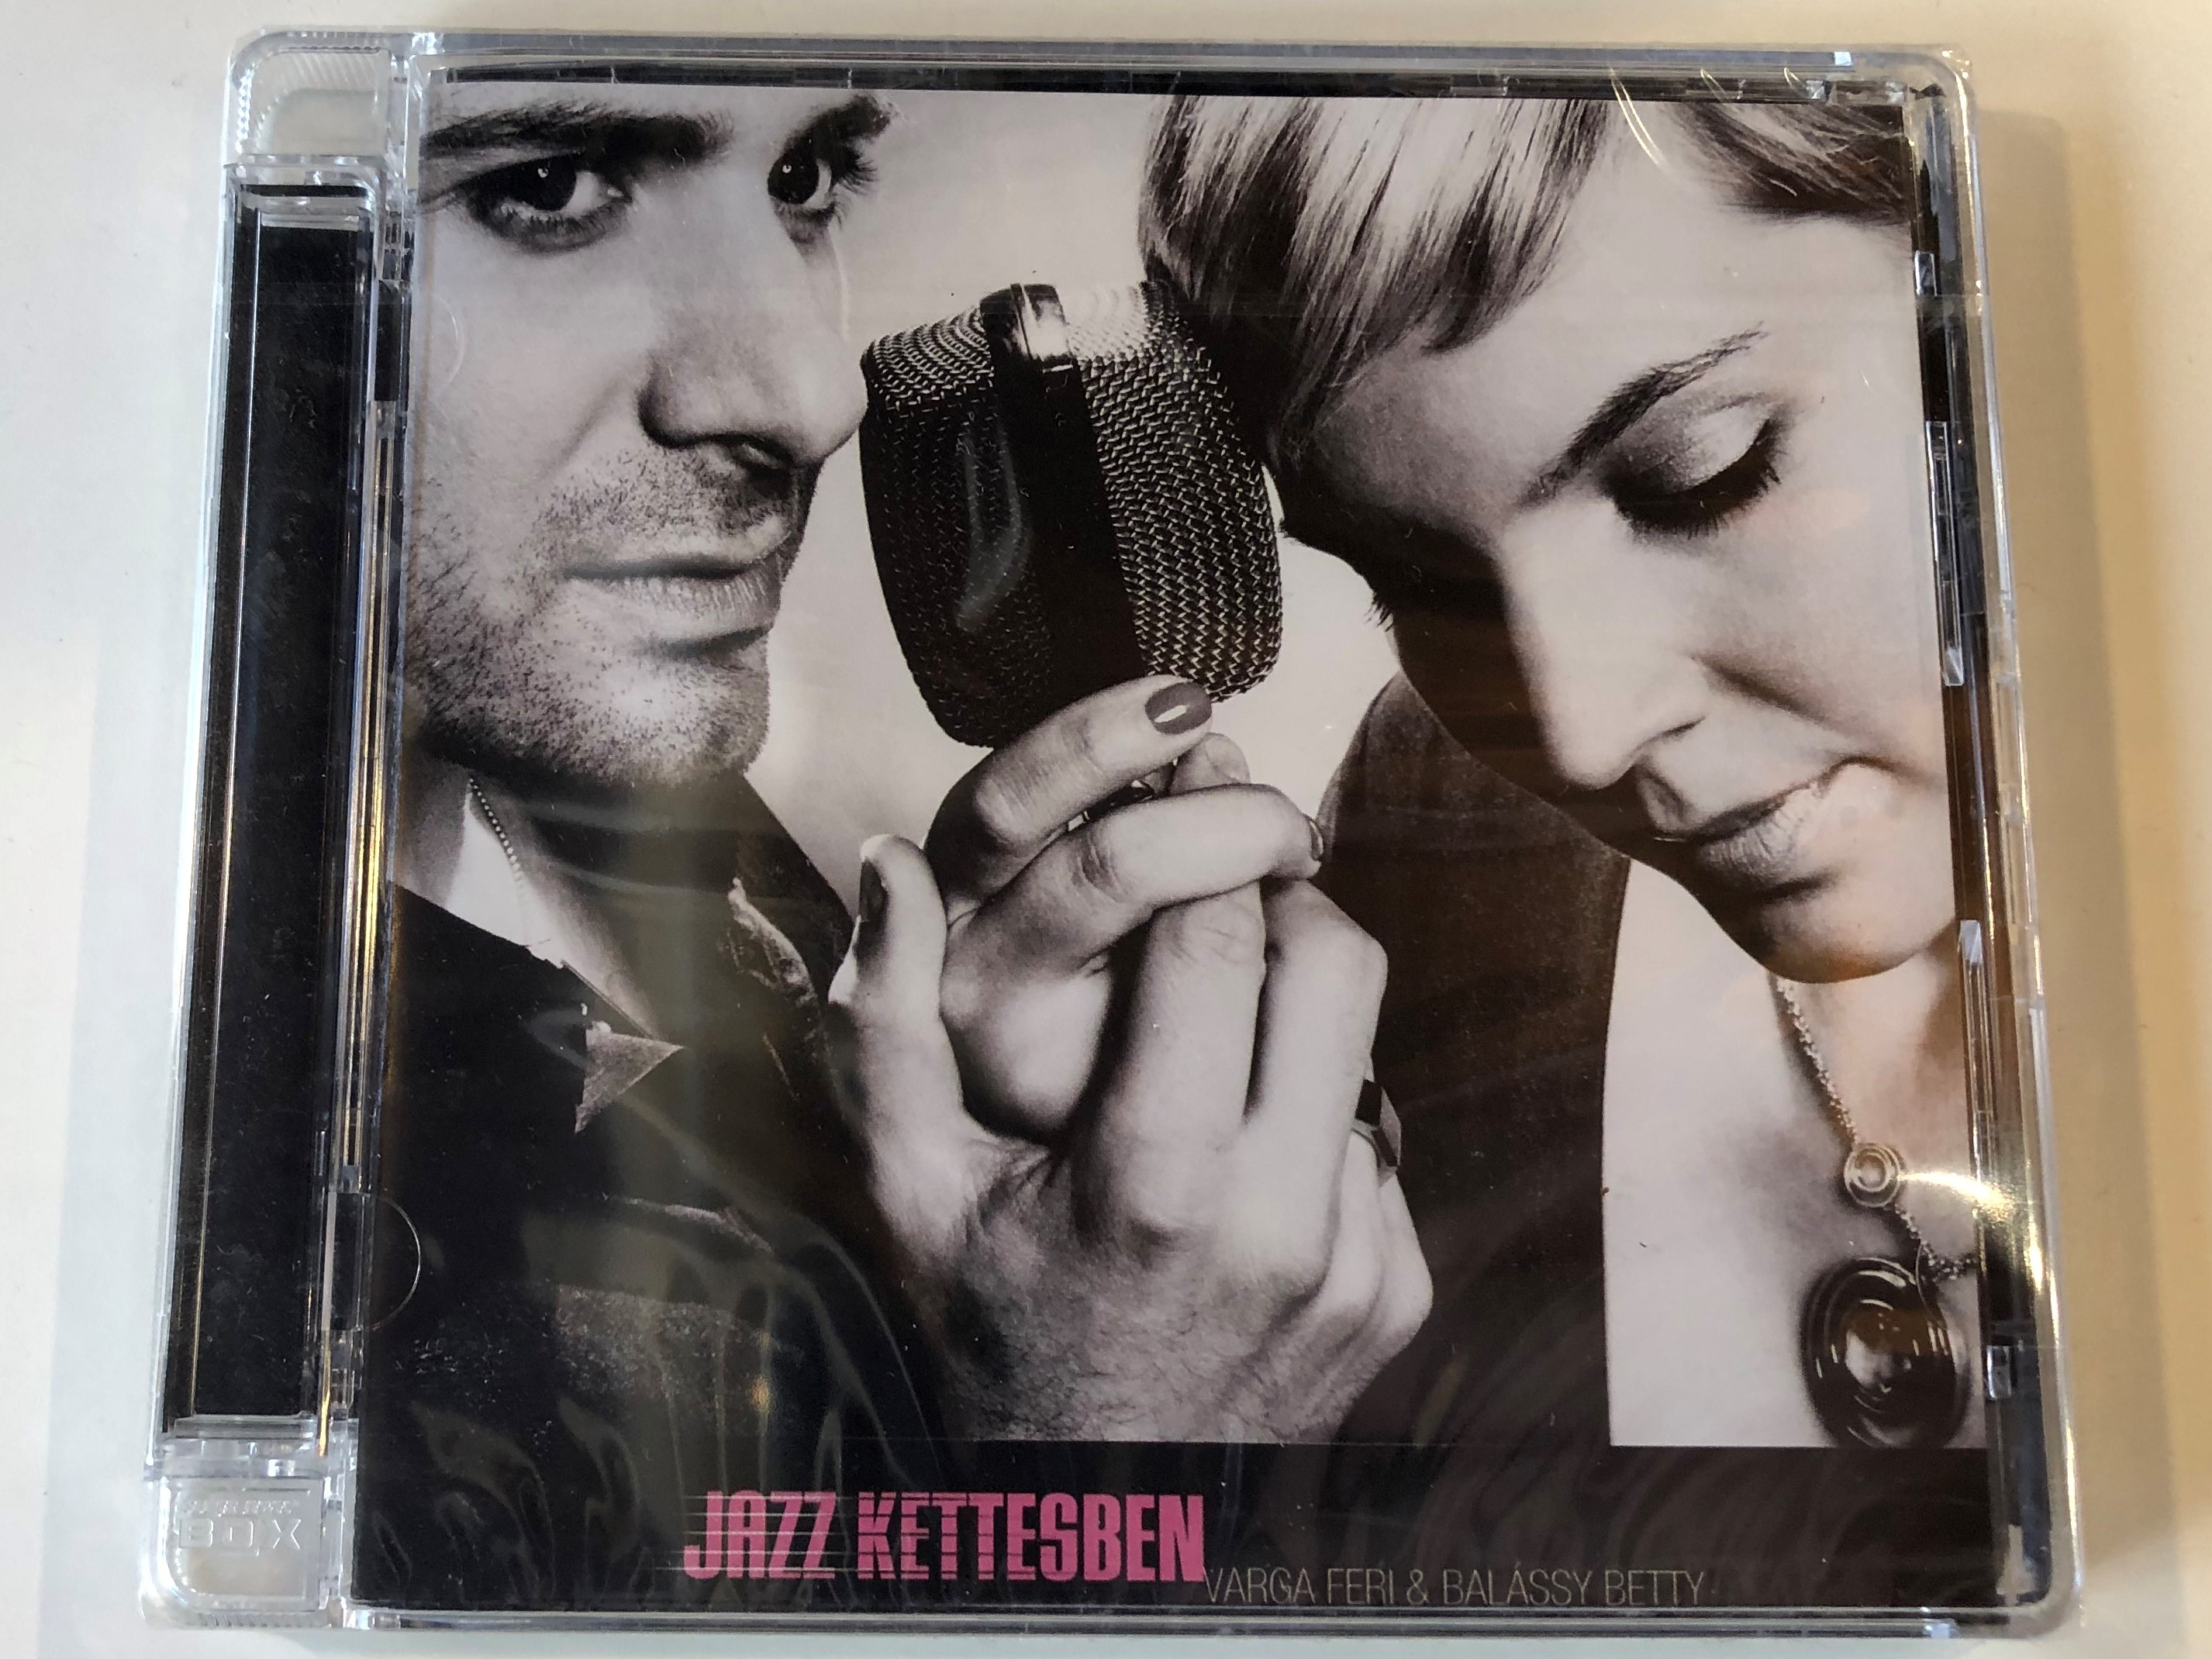 jazz-kettesben-varga-feri-bal-ssy-betty-magneoton-audio-cd-2009-5186-54354-2-1-.jpg